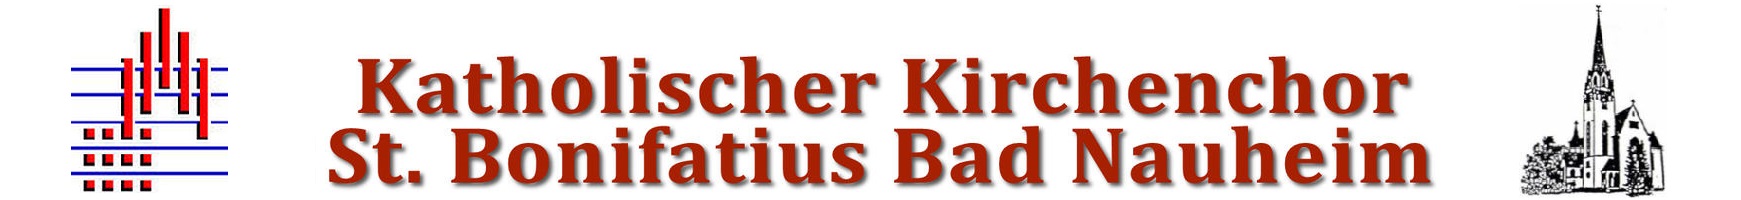 Kirchenchor-Logo